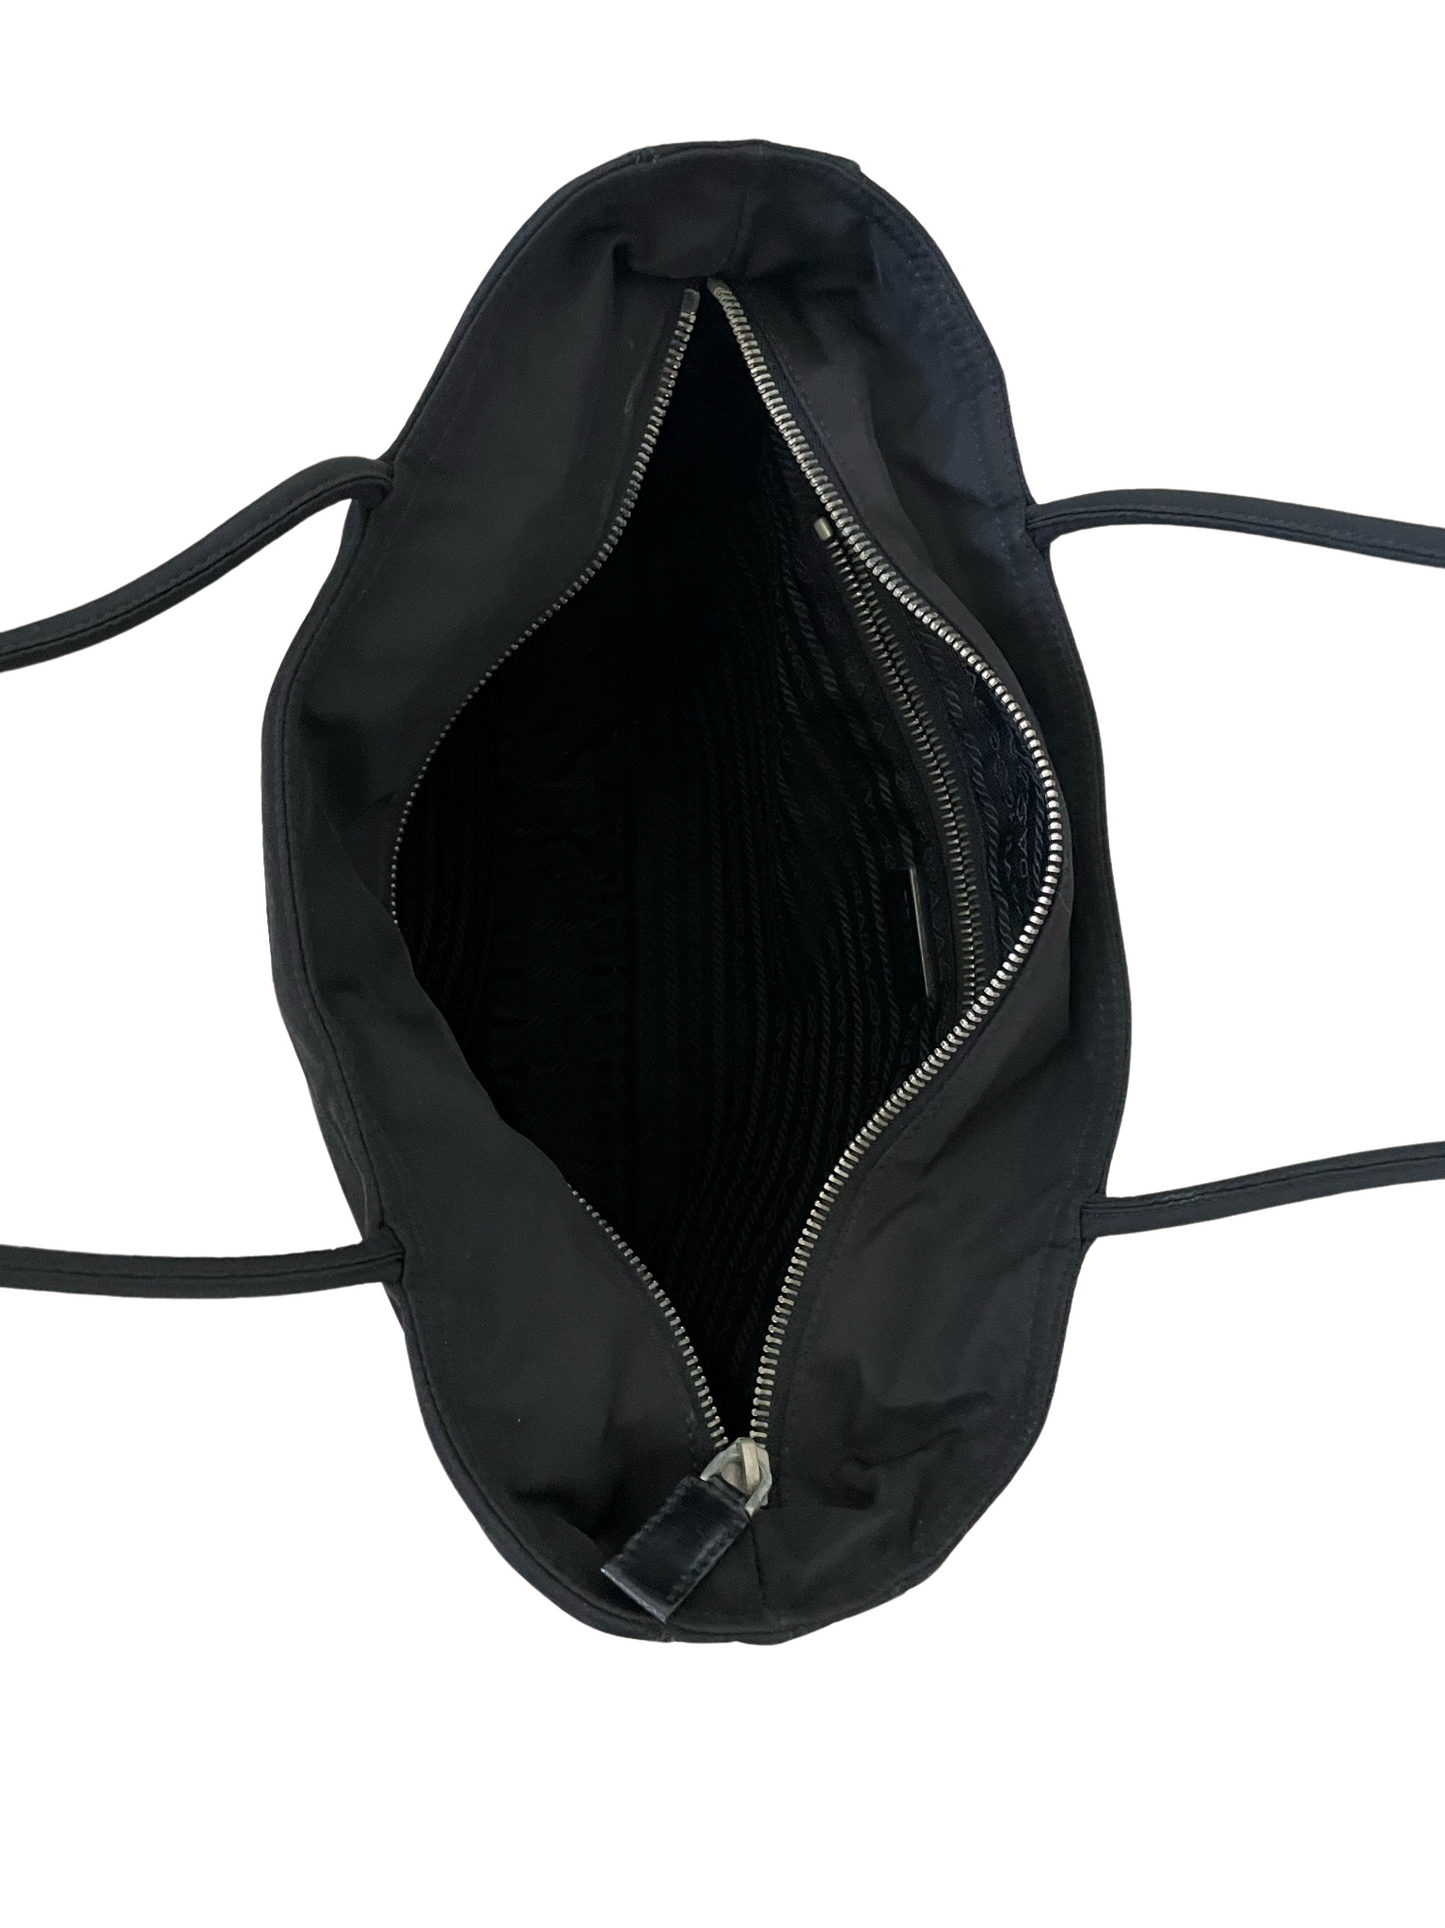 Prada Black Nylon & Leather Shoulder Bag